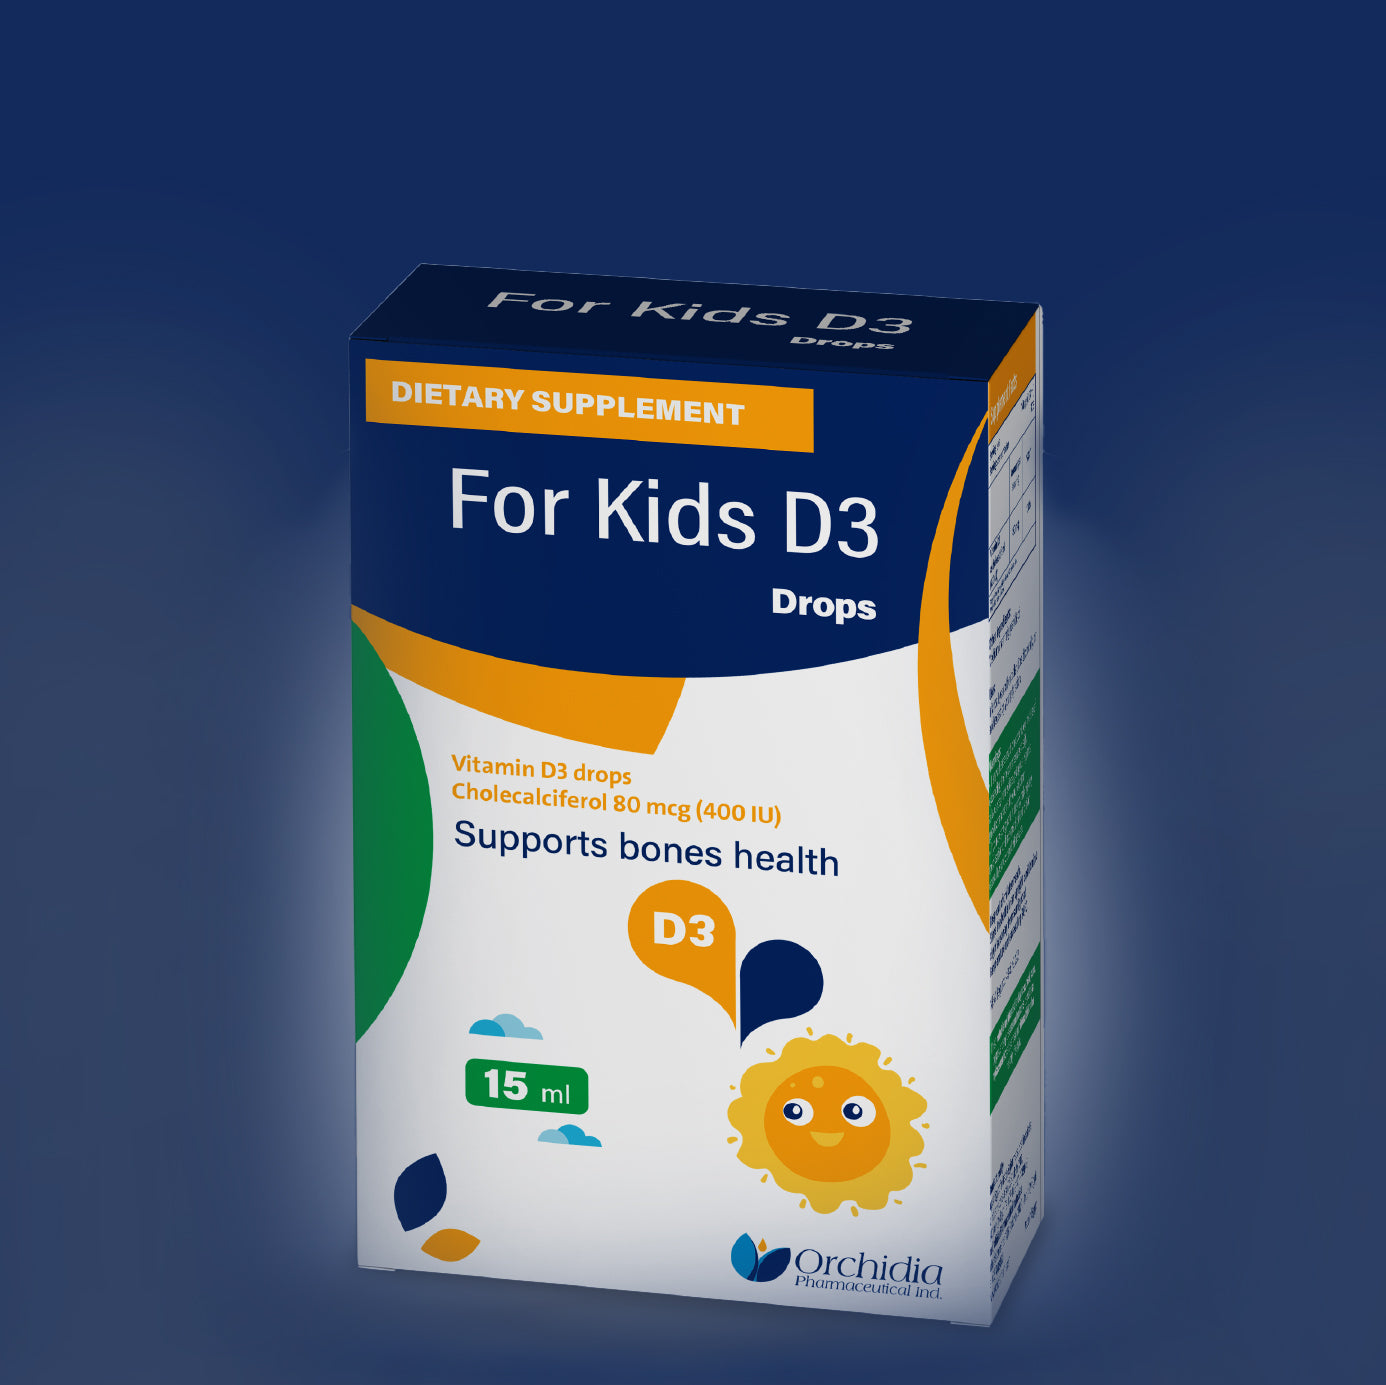 For kids D3